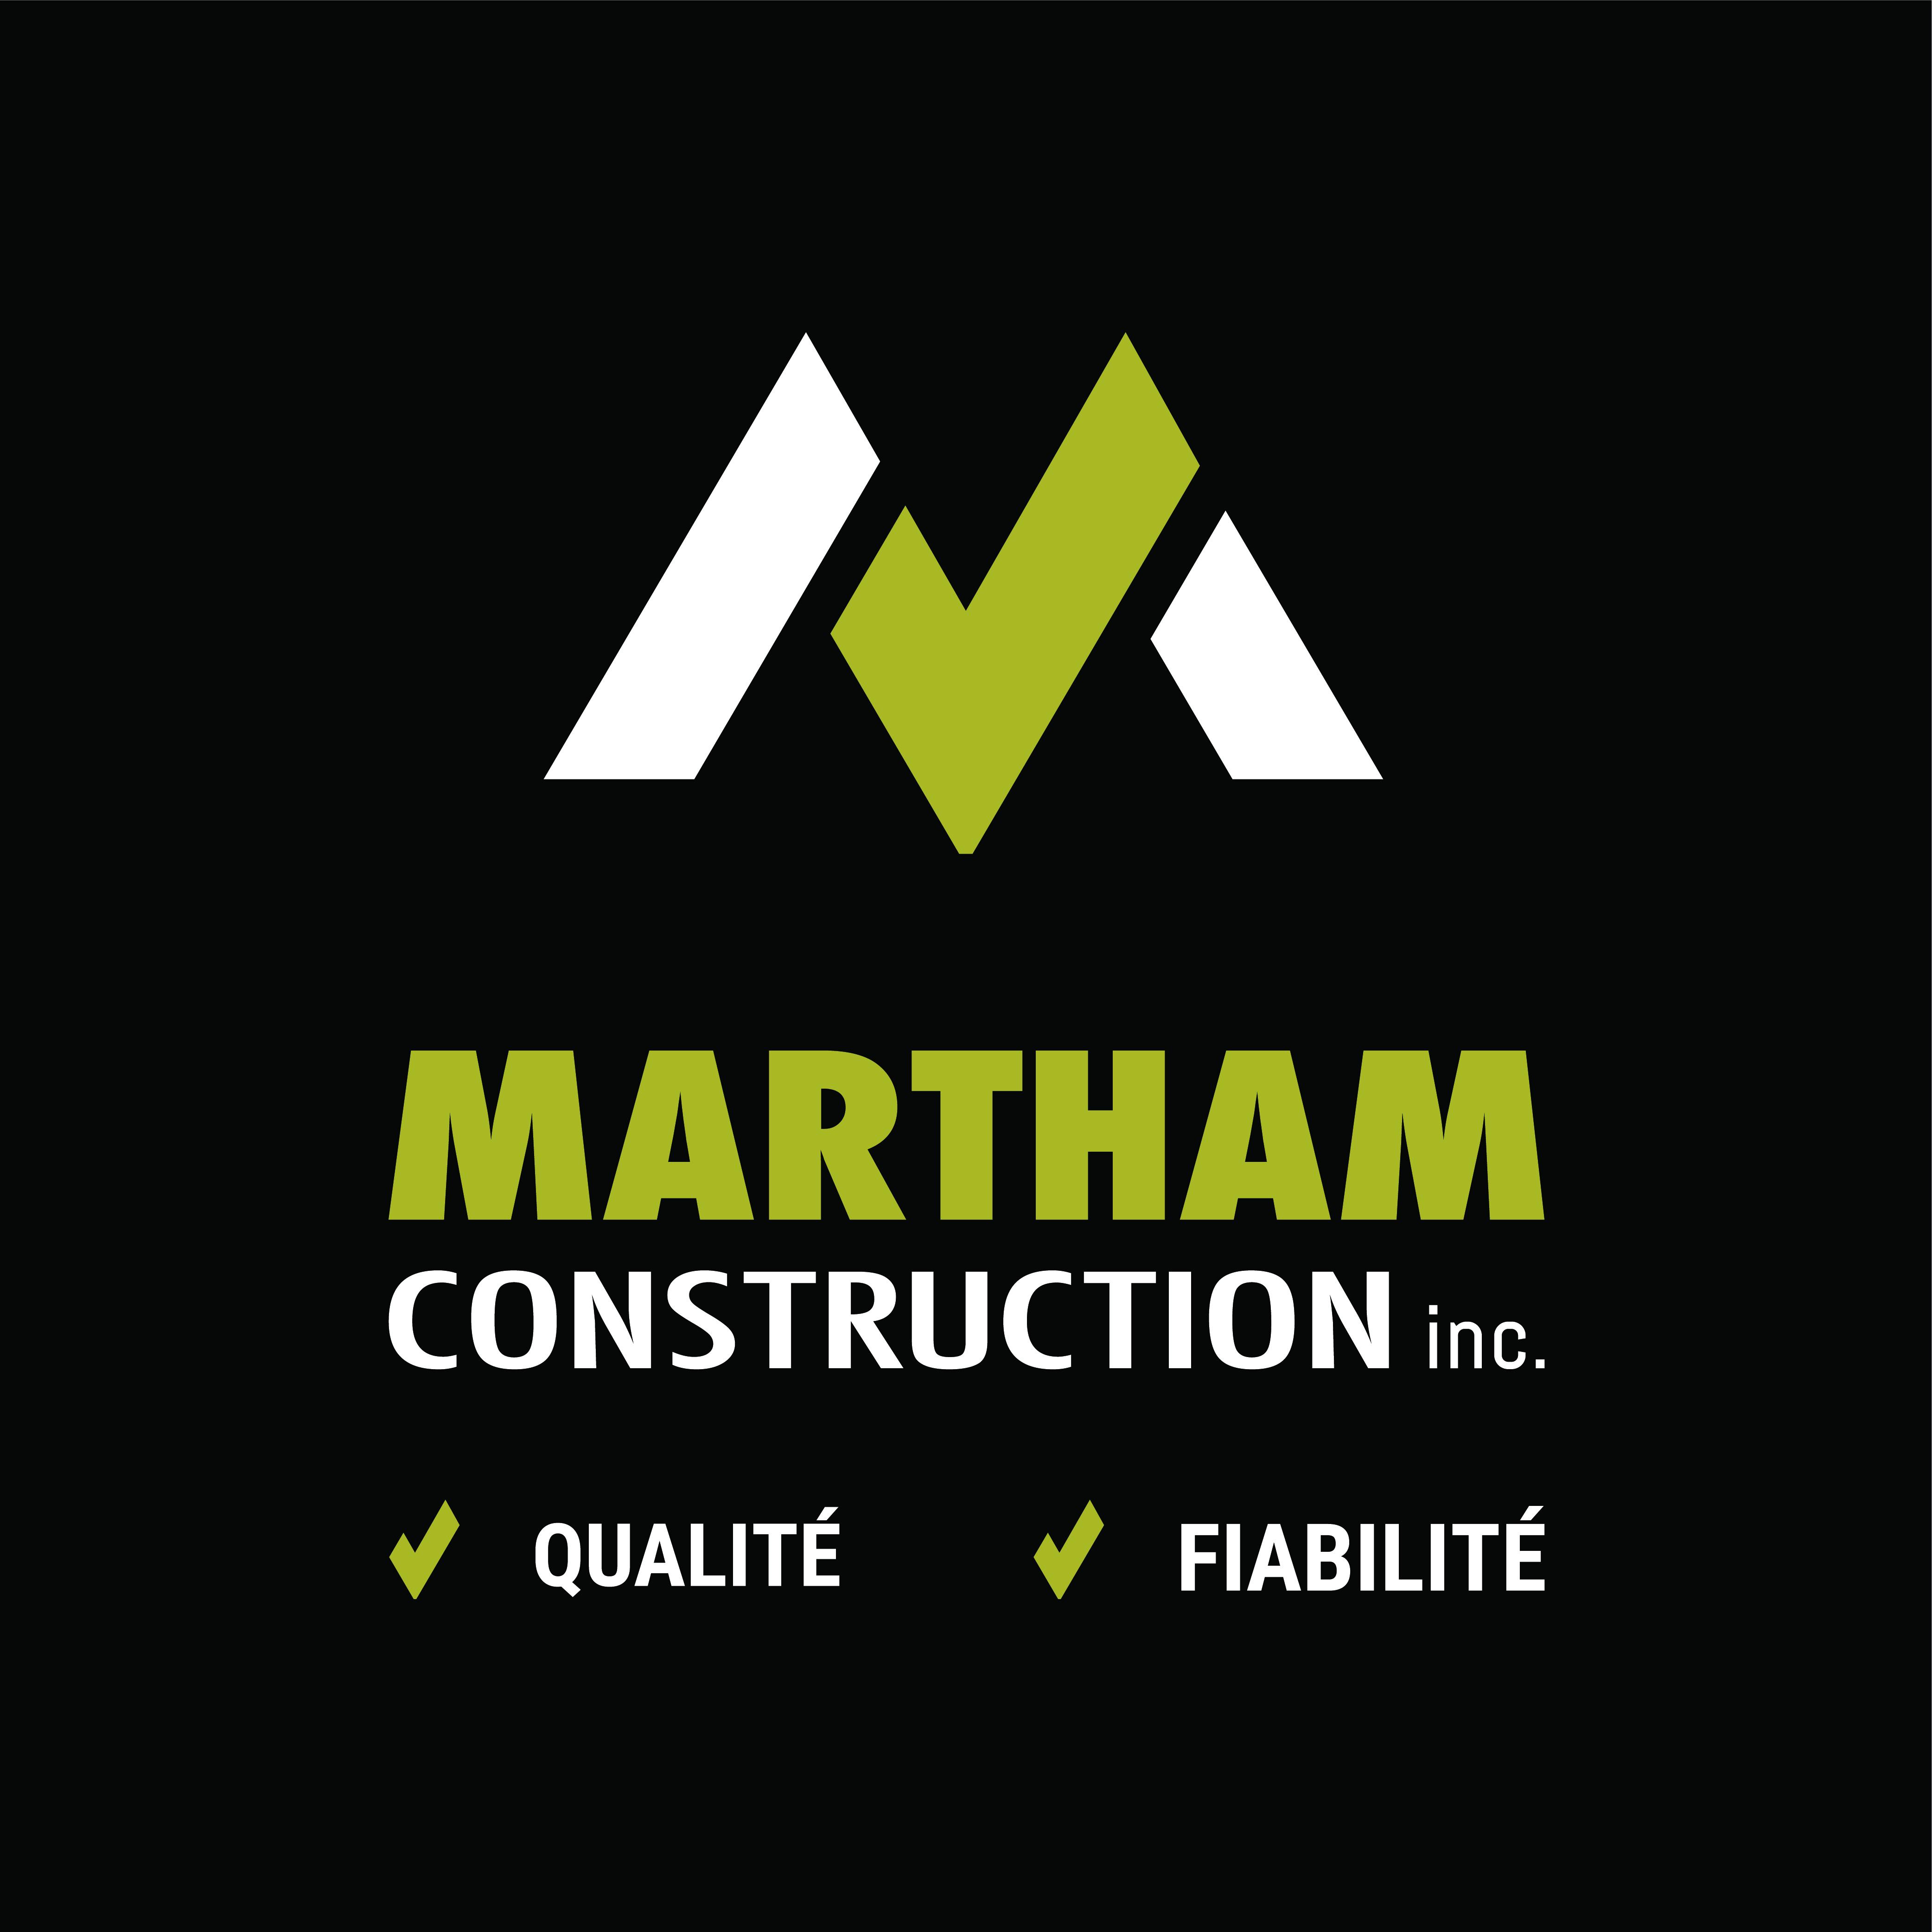 MARTHAM CONSTRUCTION INC.